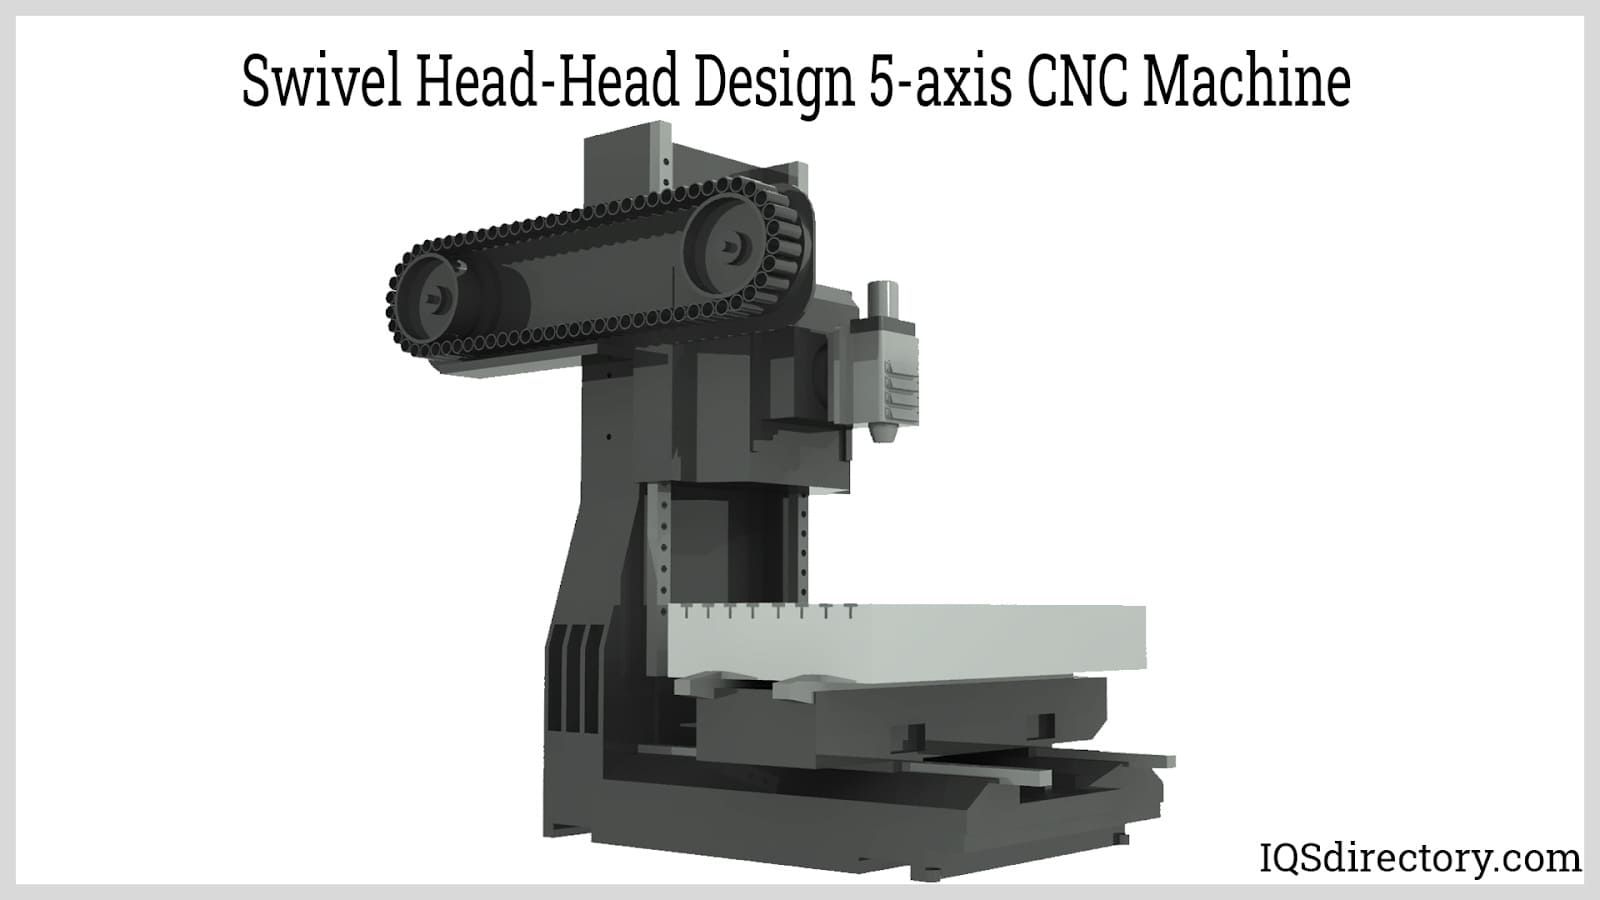 Swivel Head-Head Design 5-axis CNC Machine